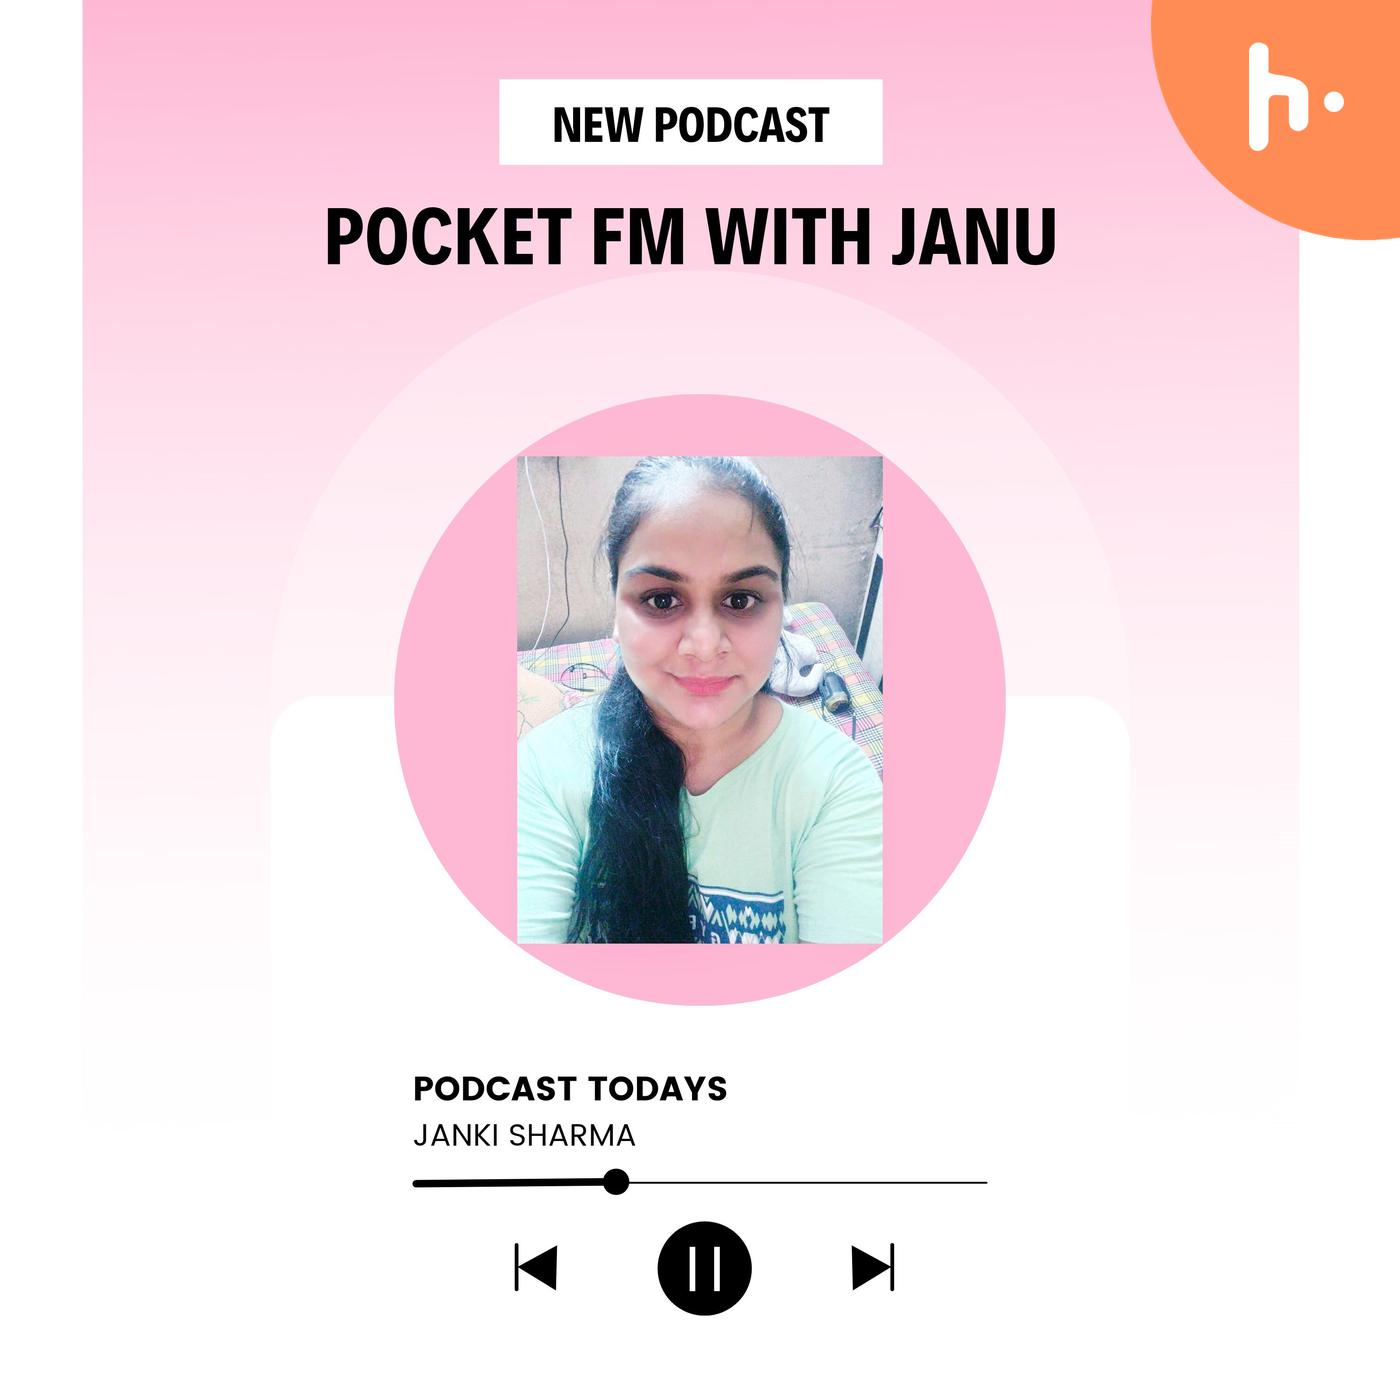 Janki Sharma's second podcast